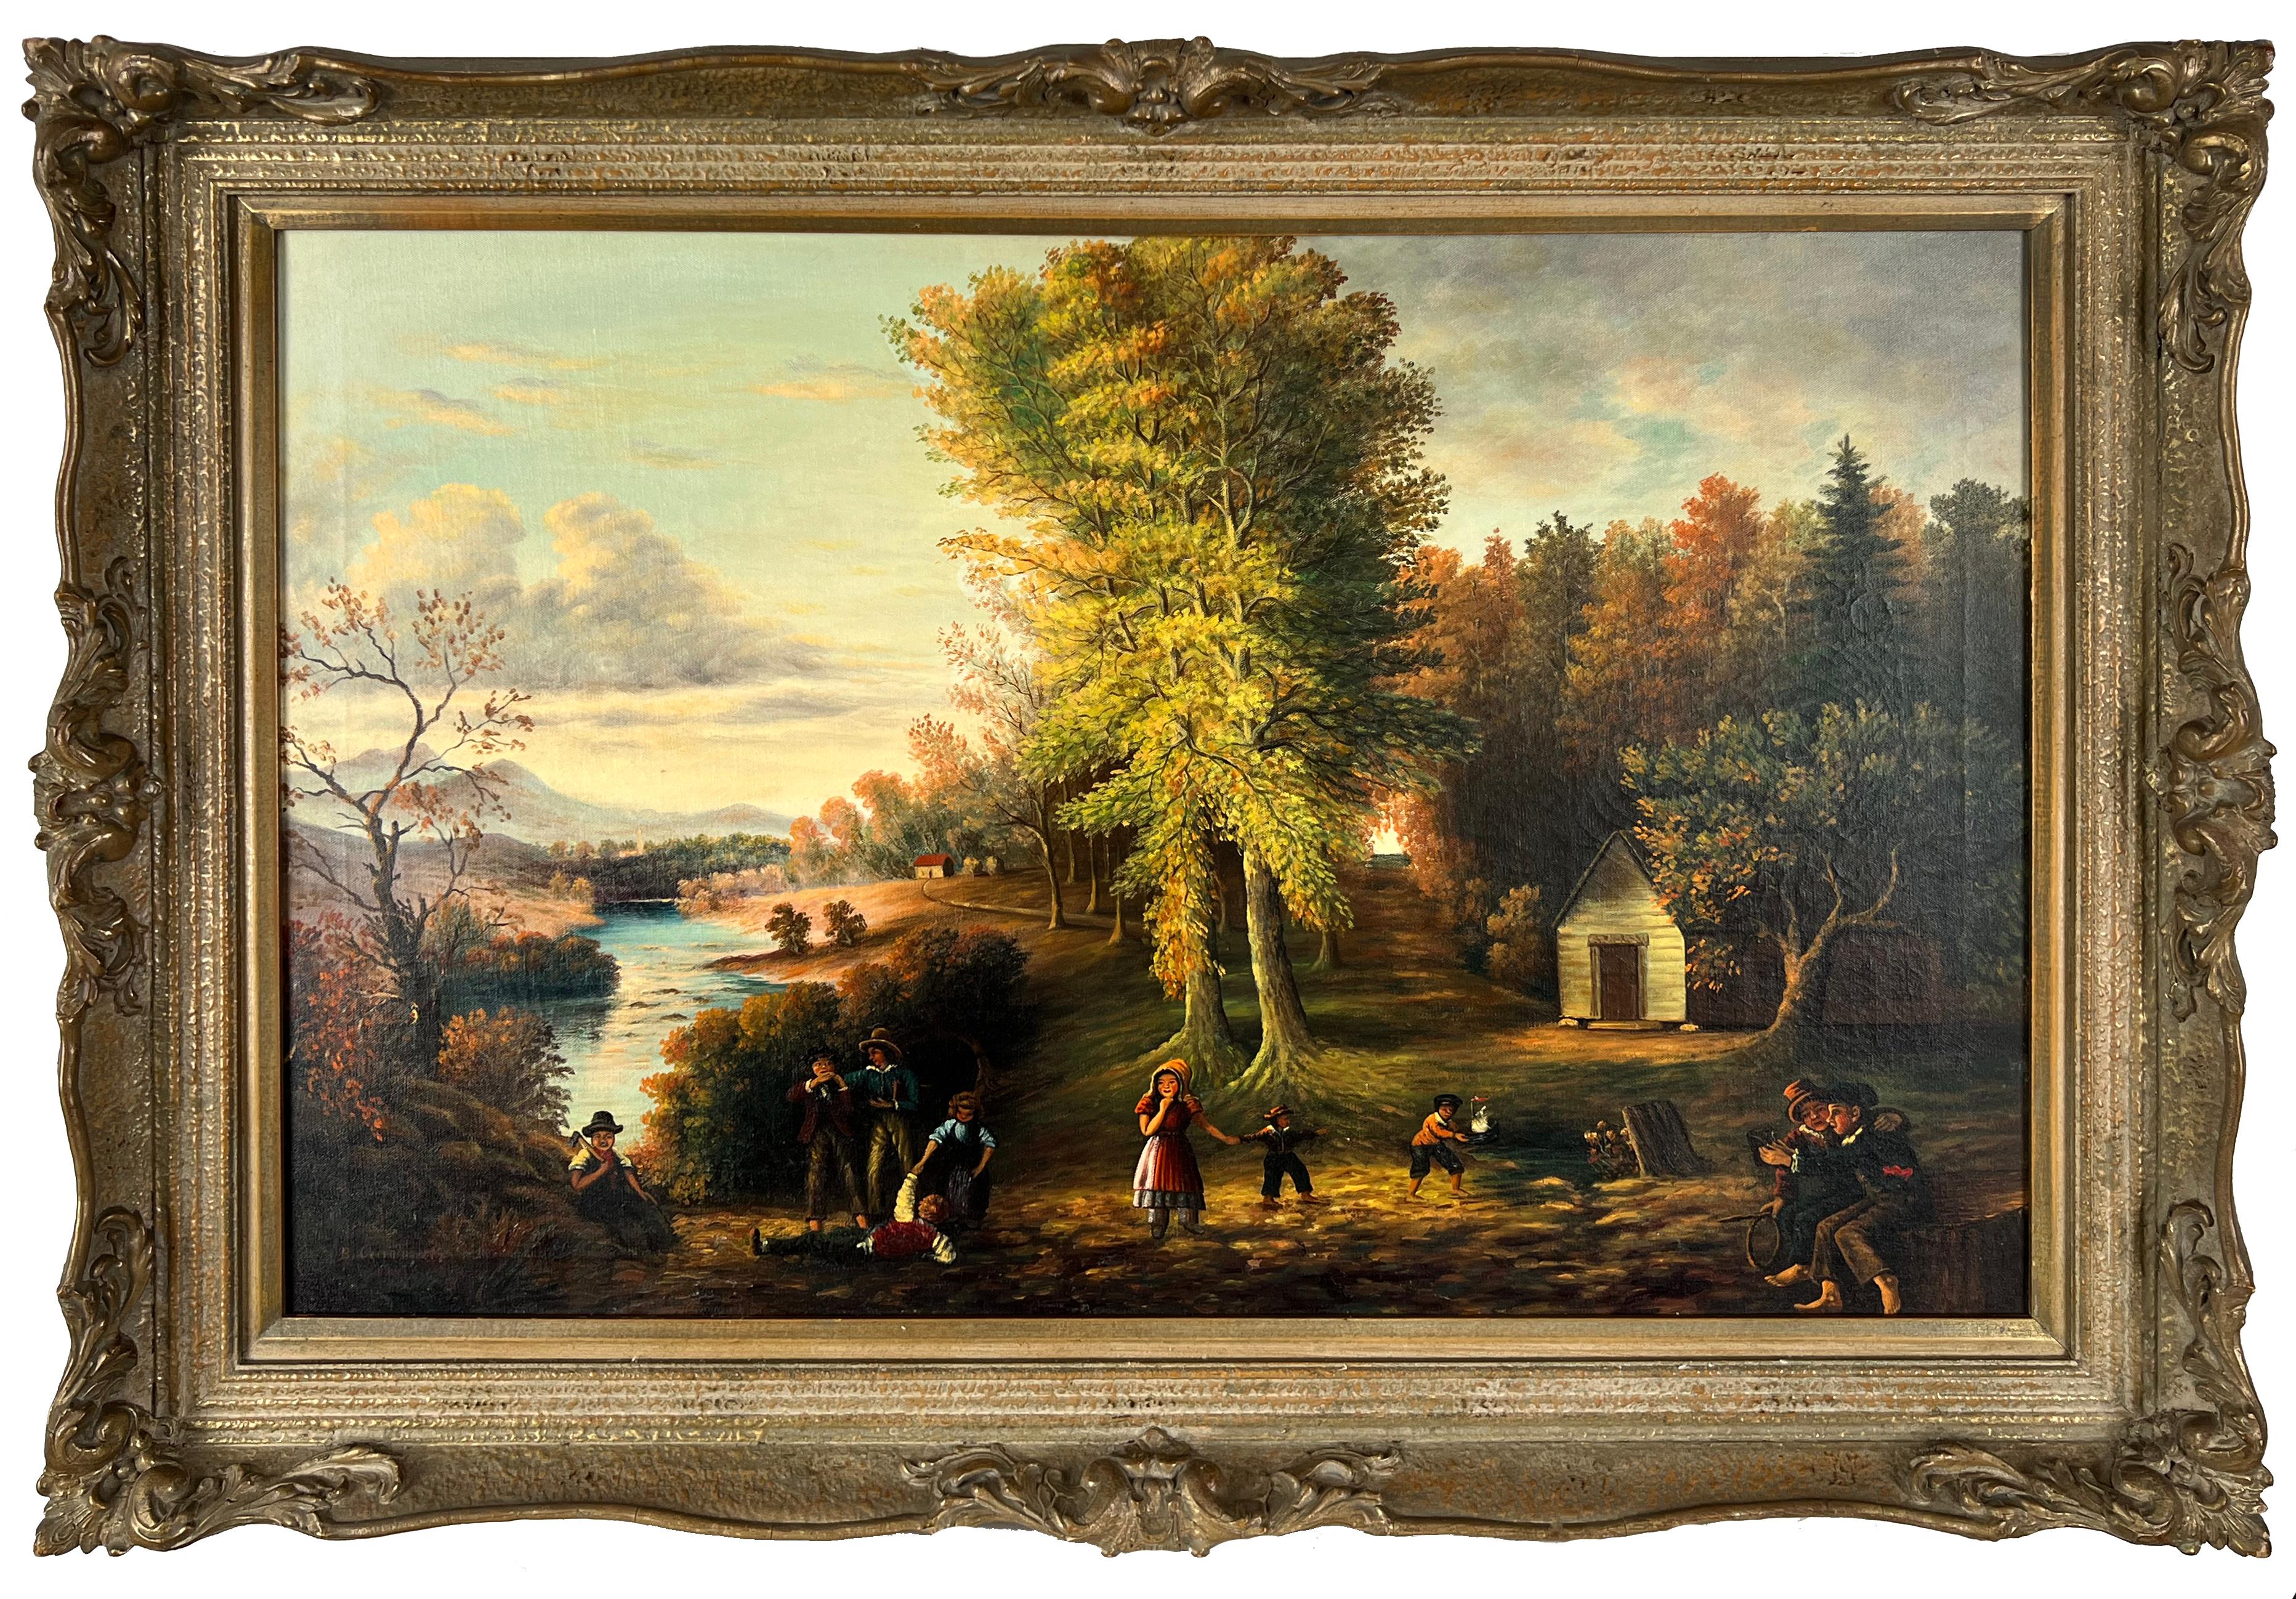 B. Czerniawski Landscape Painting - Evening Time New York Hudson River School Scene Oil on Canvas Ornate Frame